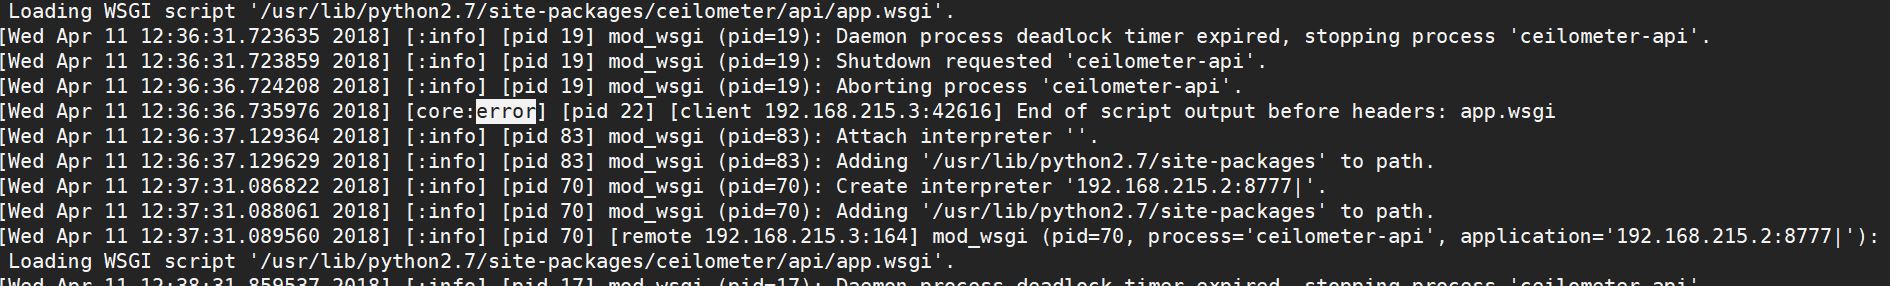 openstack中如何解决End of script output before headers: app.wsgi错误问题